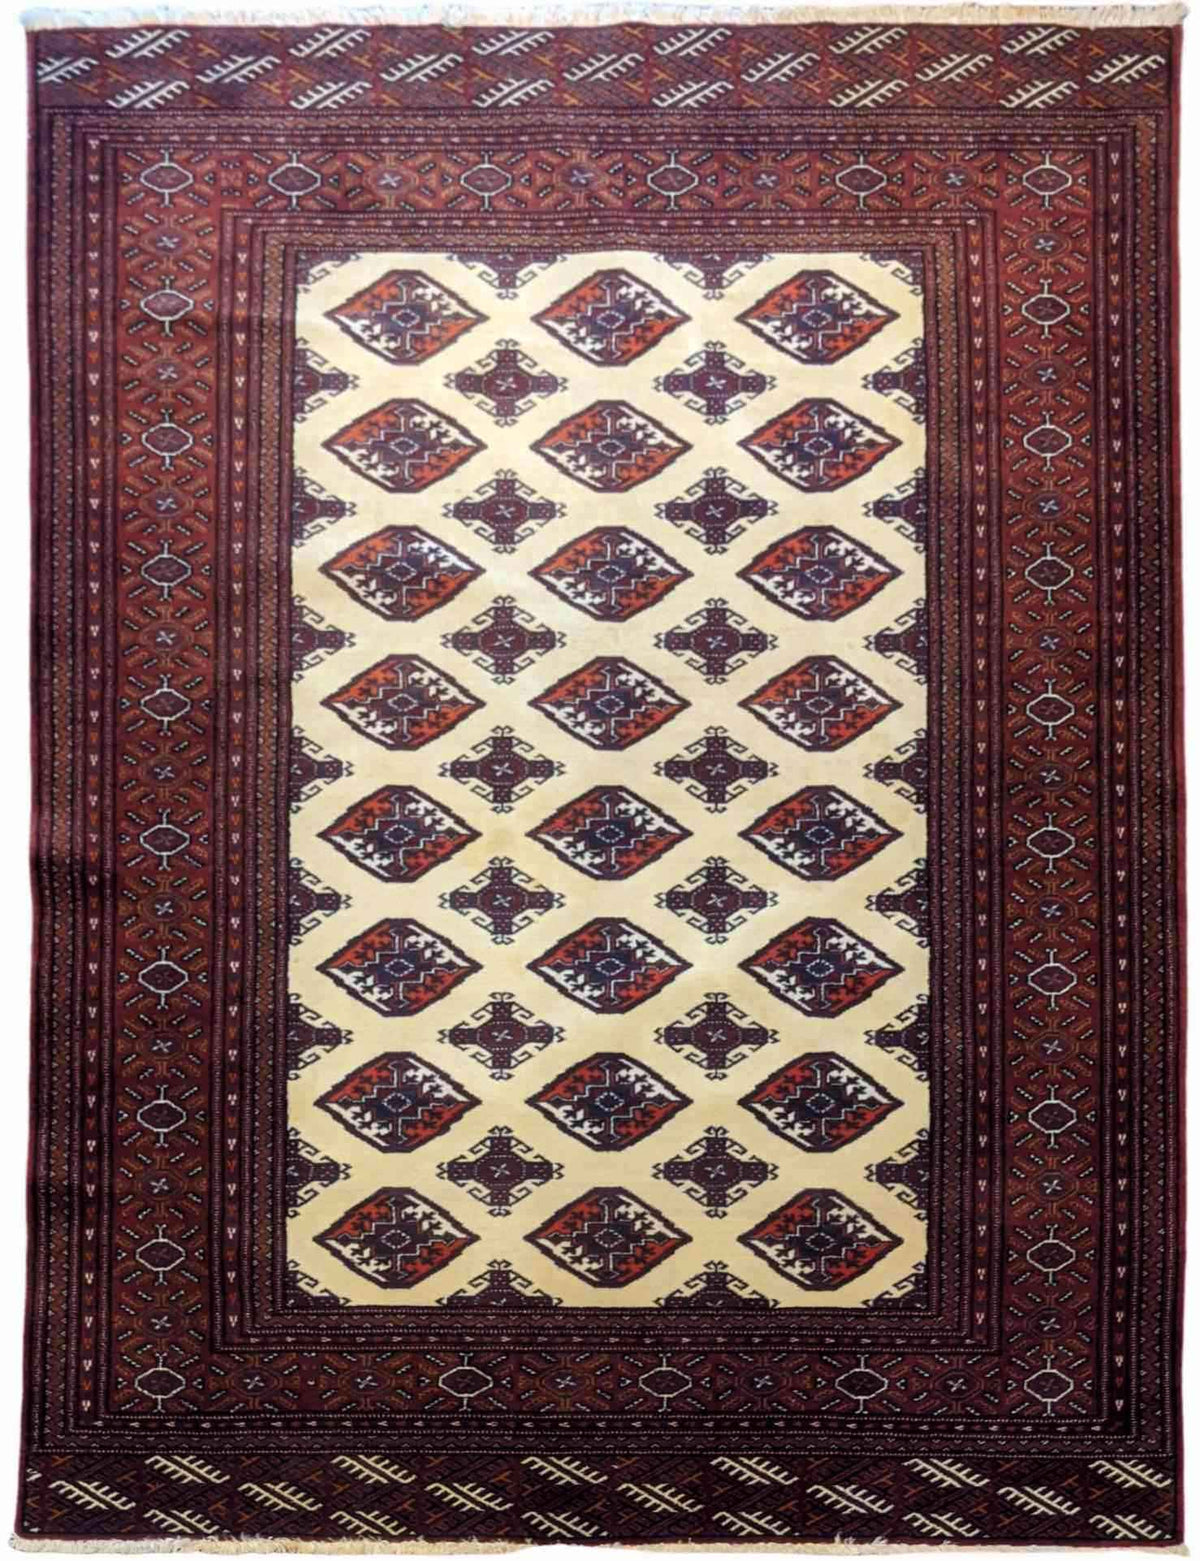 186 x 135 cm Turkaman Tribal Purple Rug - Rugmaster